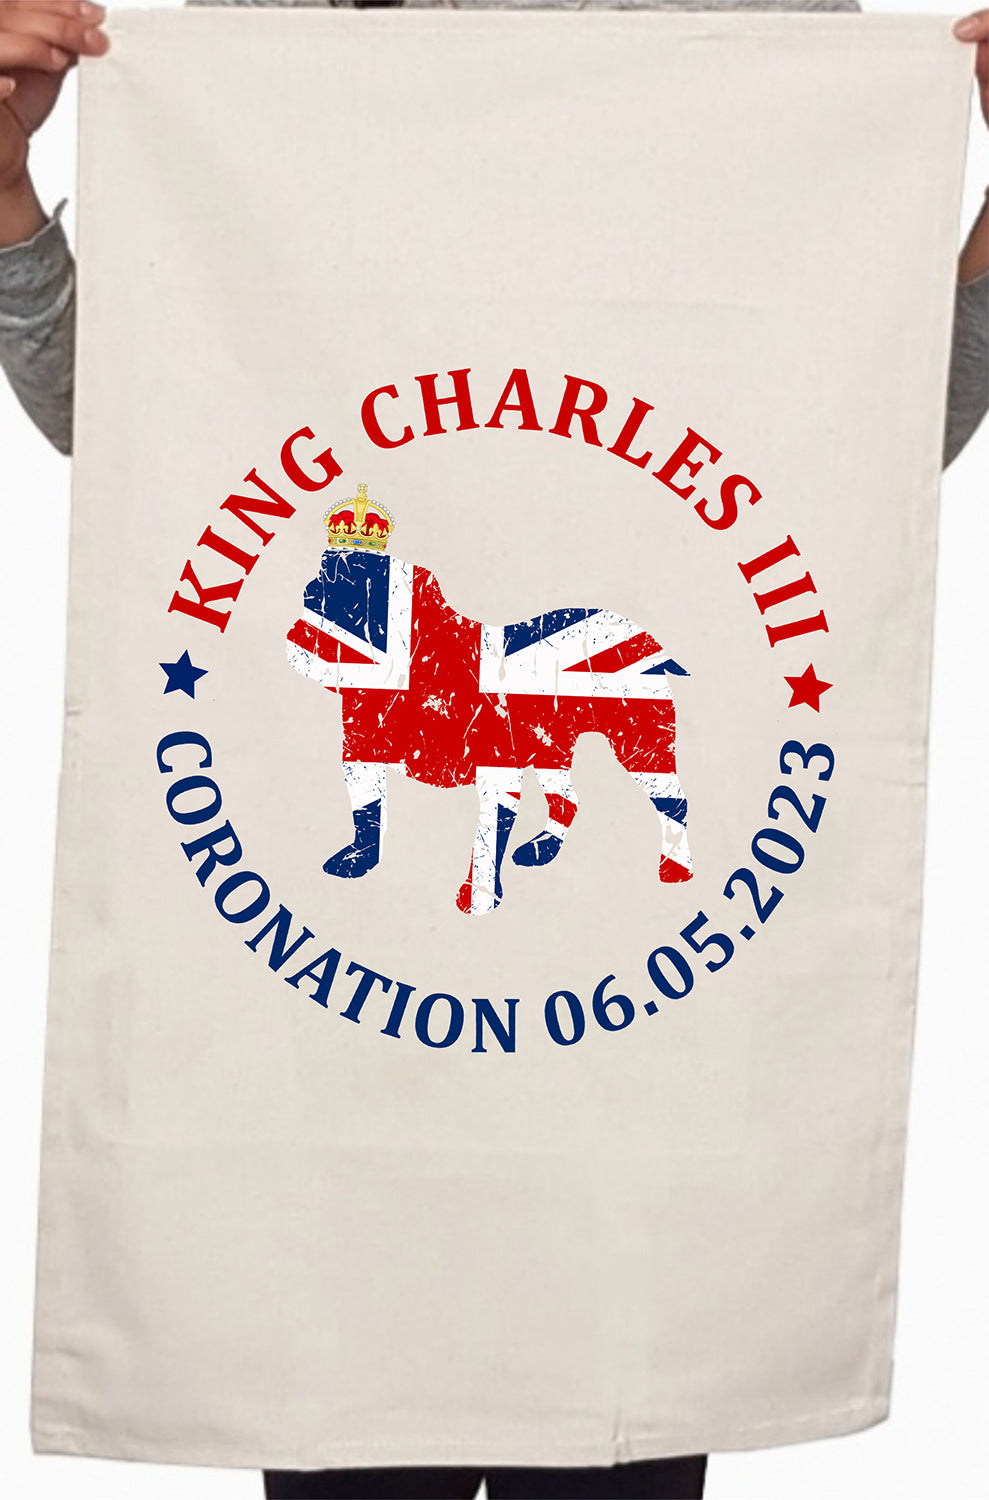 British Dog Union Jack Flag King Charles III Kitchen Table Tea Towel